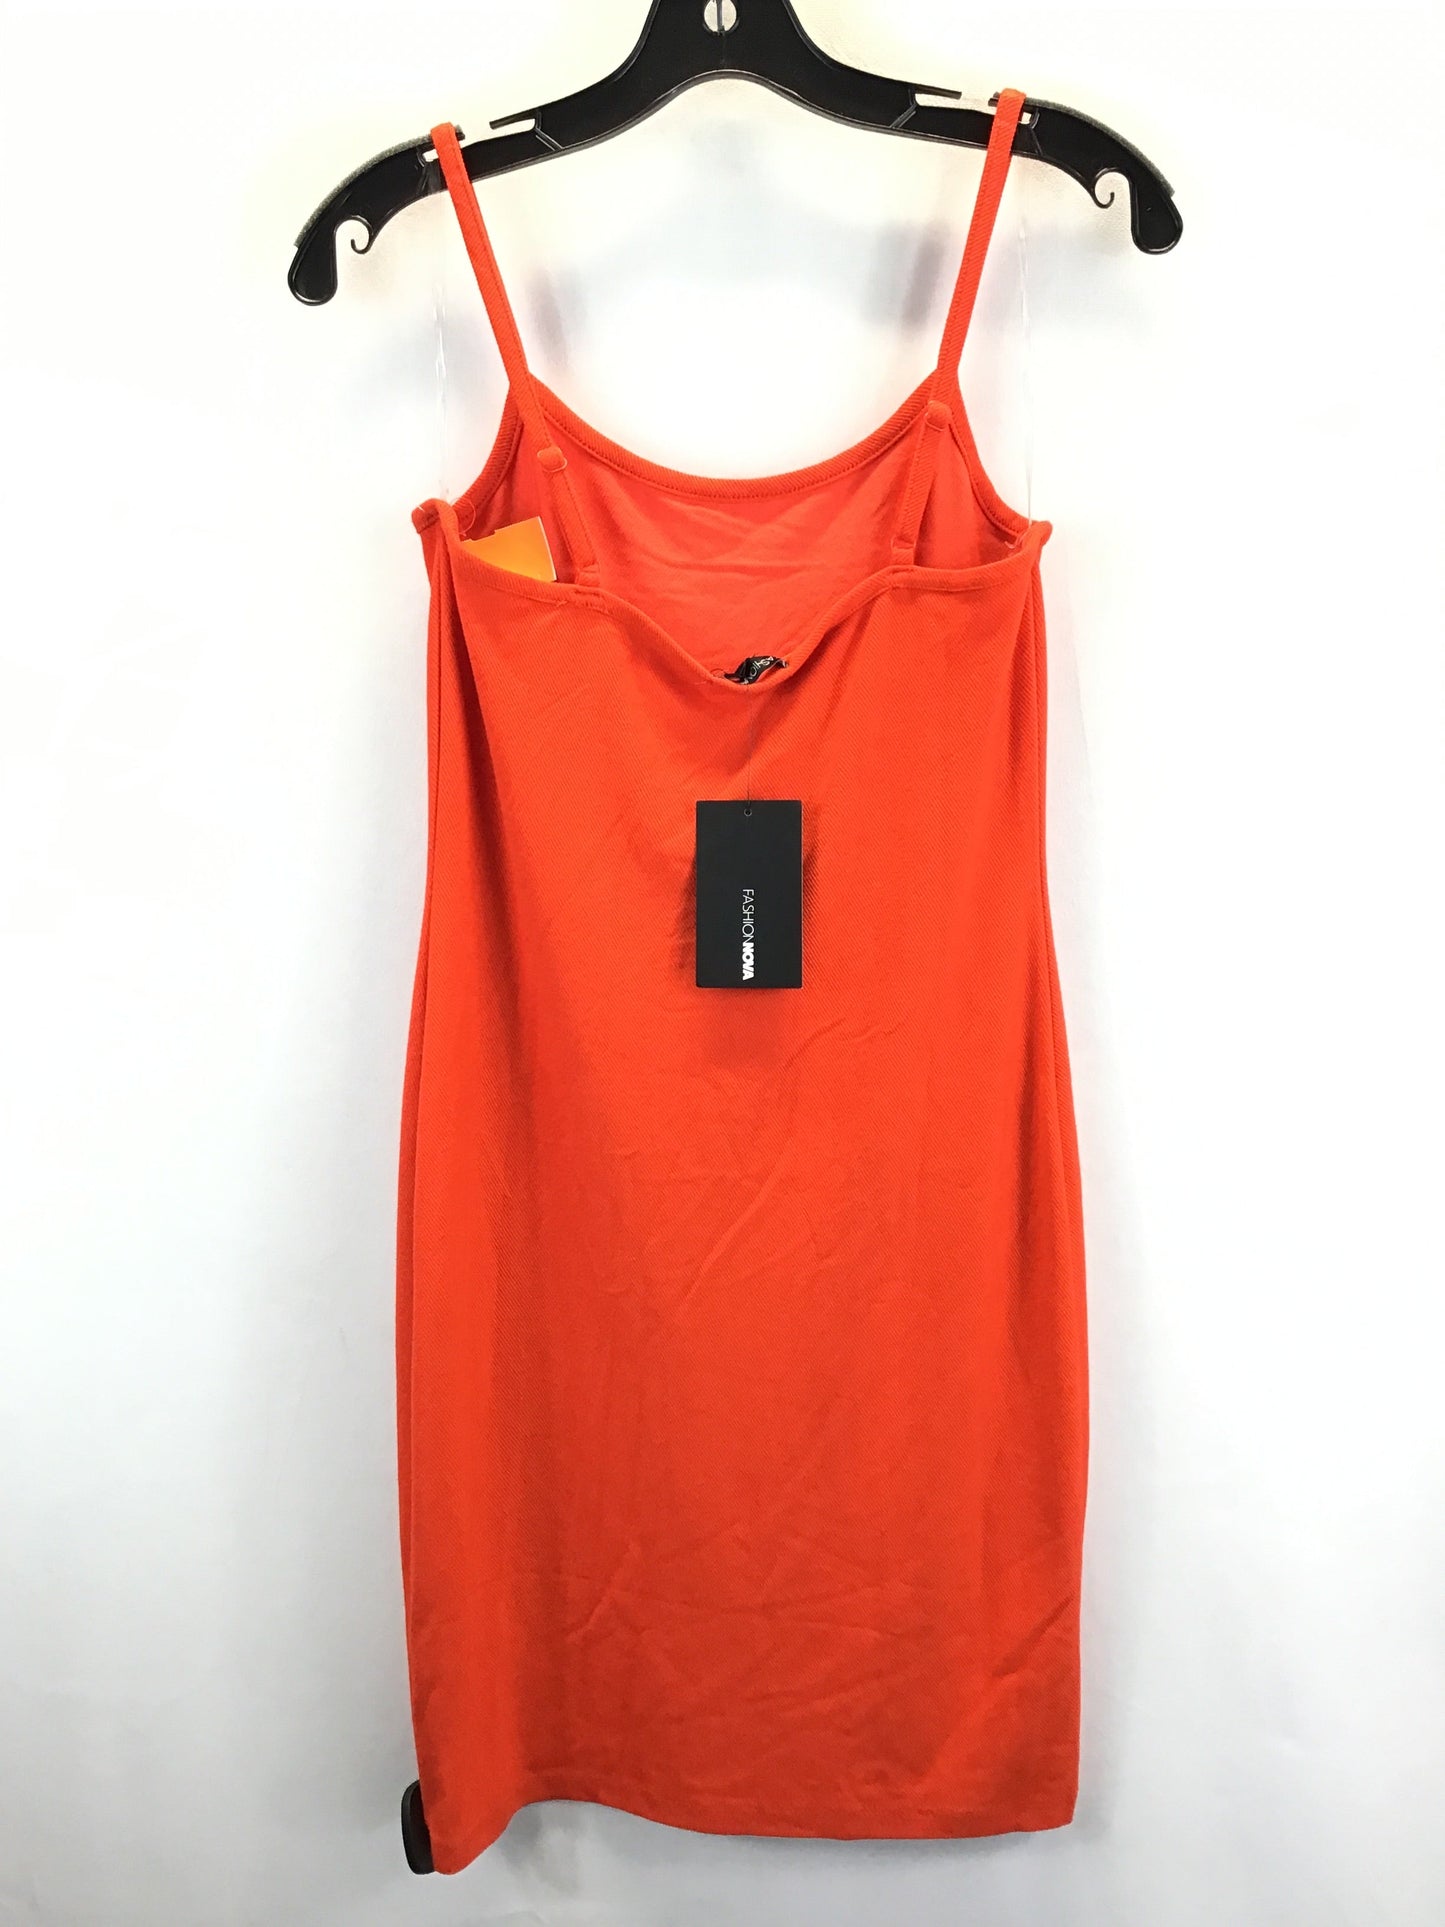 Orange Dress Casual Short Fashion Nova, Size L